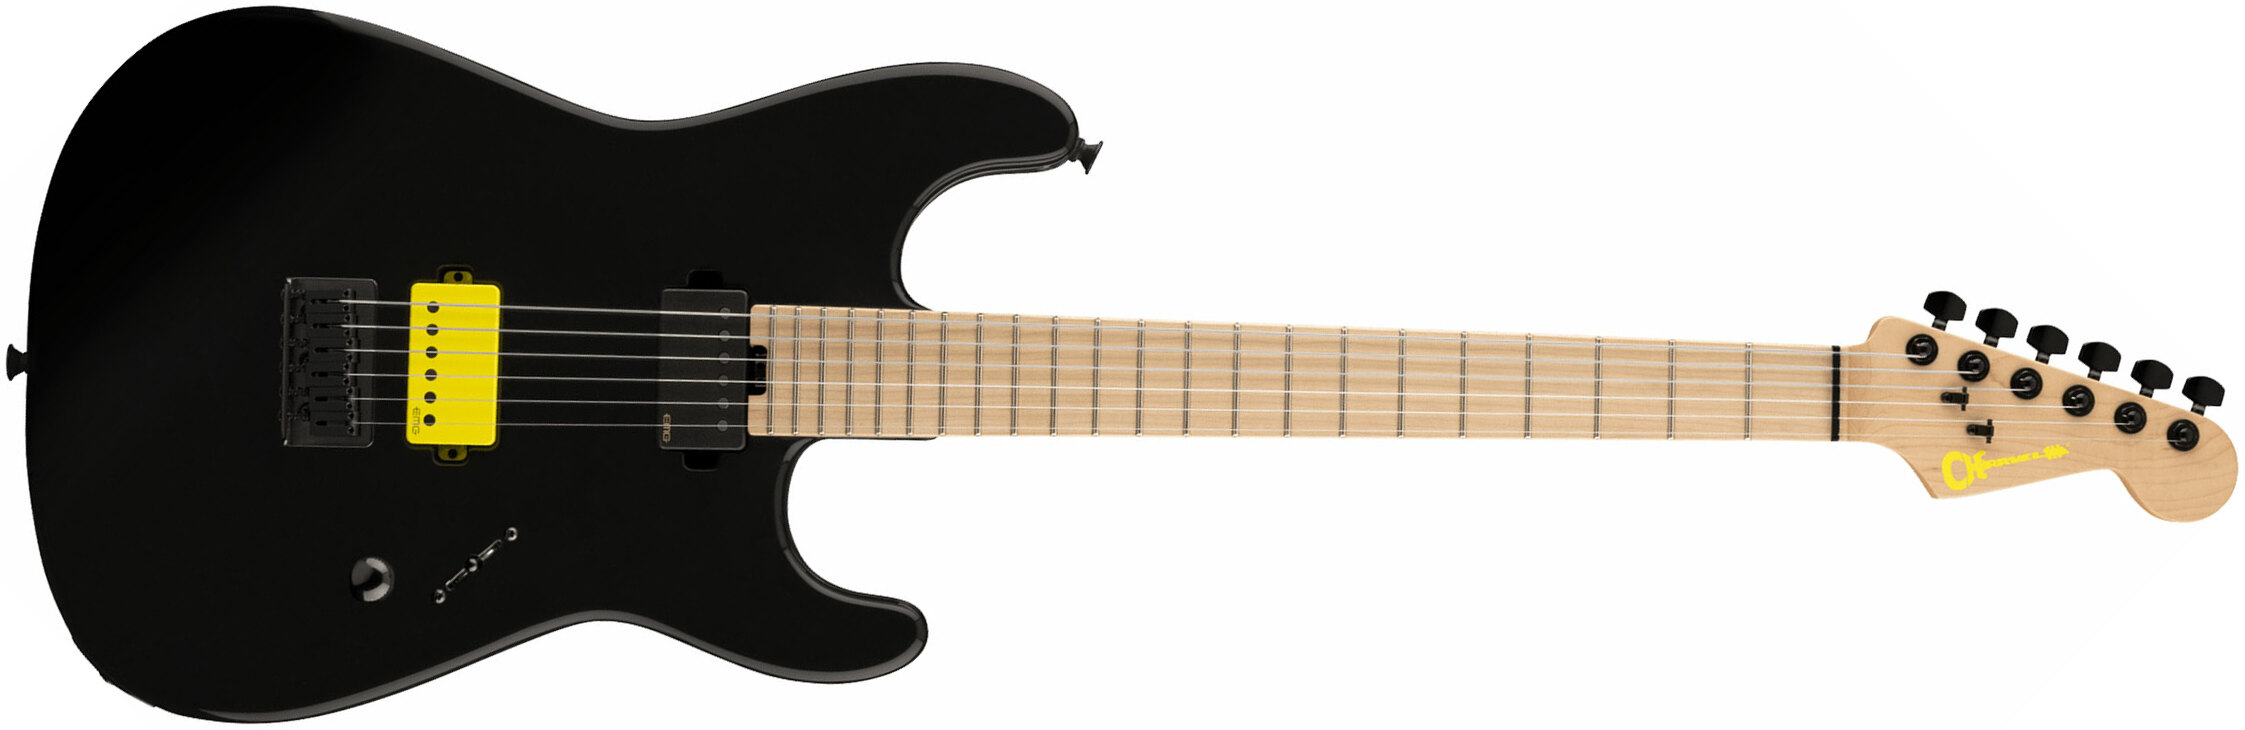 Charvel Sean Long San Dimas Style 1 Pro-mod Signature 2h Emg Ht Mn - Gloss Black - Str shape electric guitar - Main picture